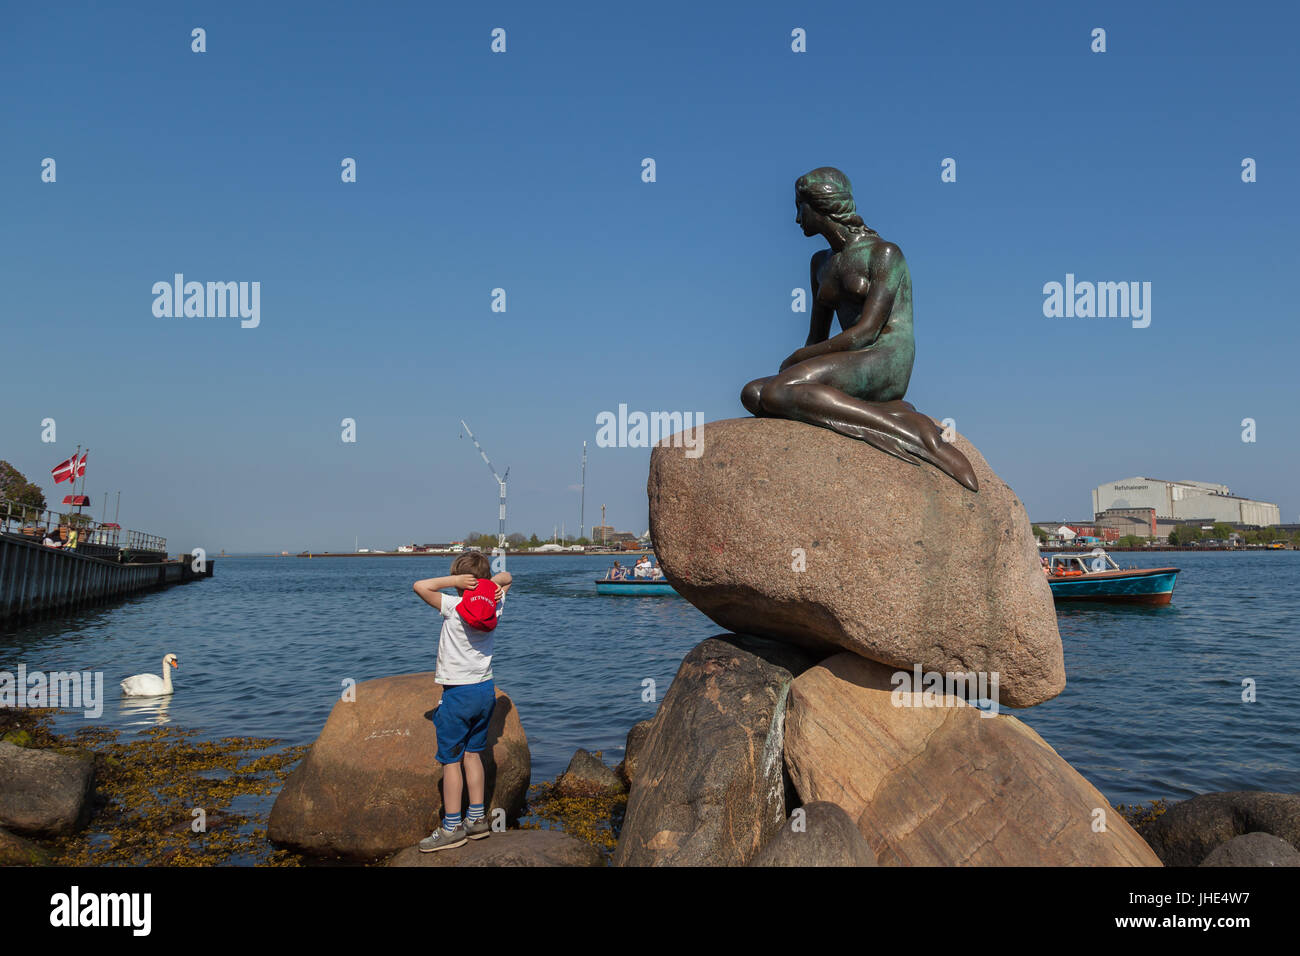 A boy at The Little Mermaid statue in Copenhagen, Denmark. Stock Photo